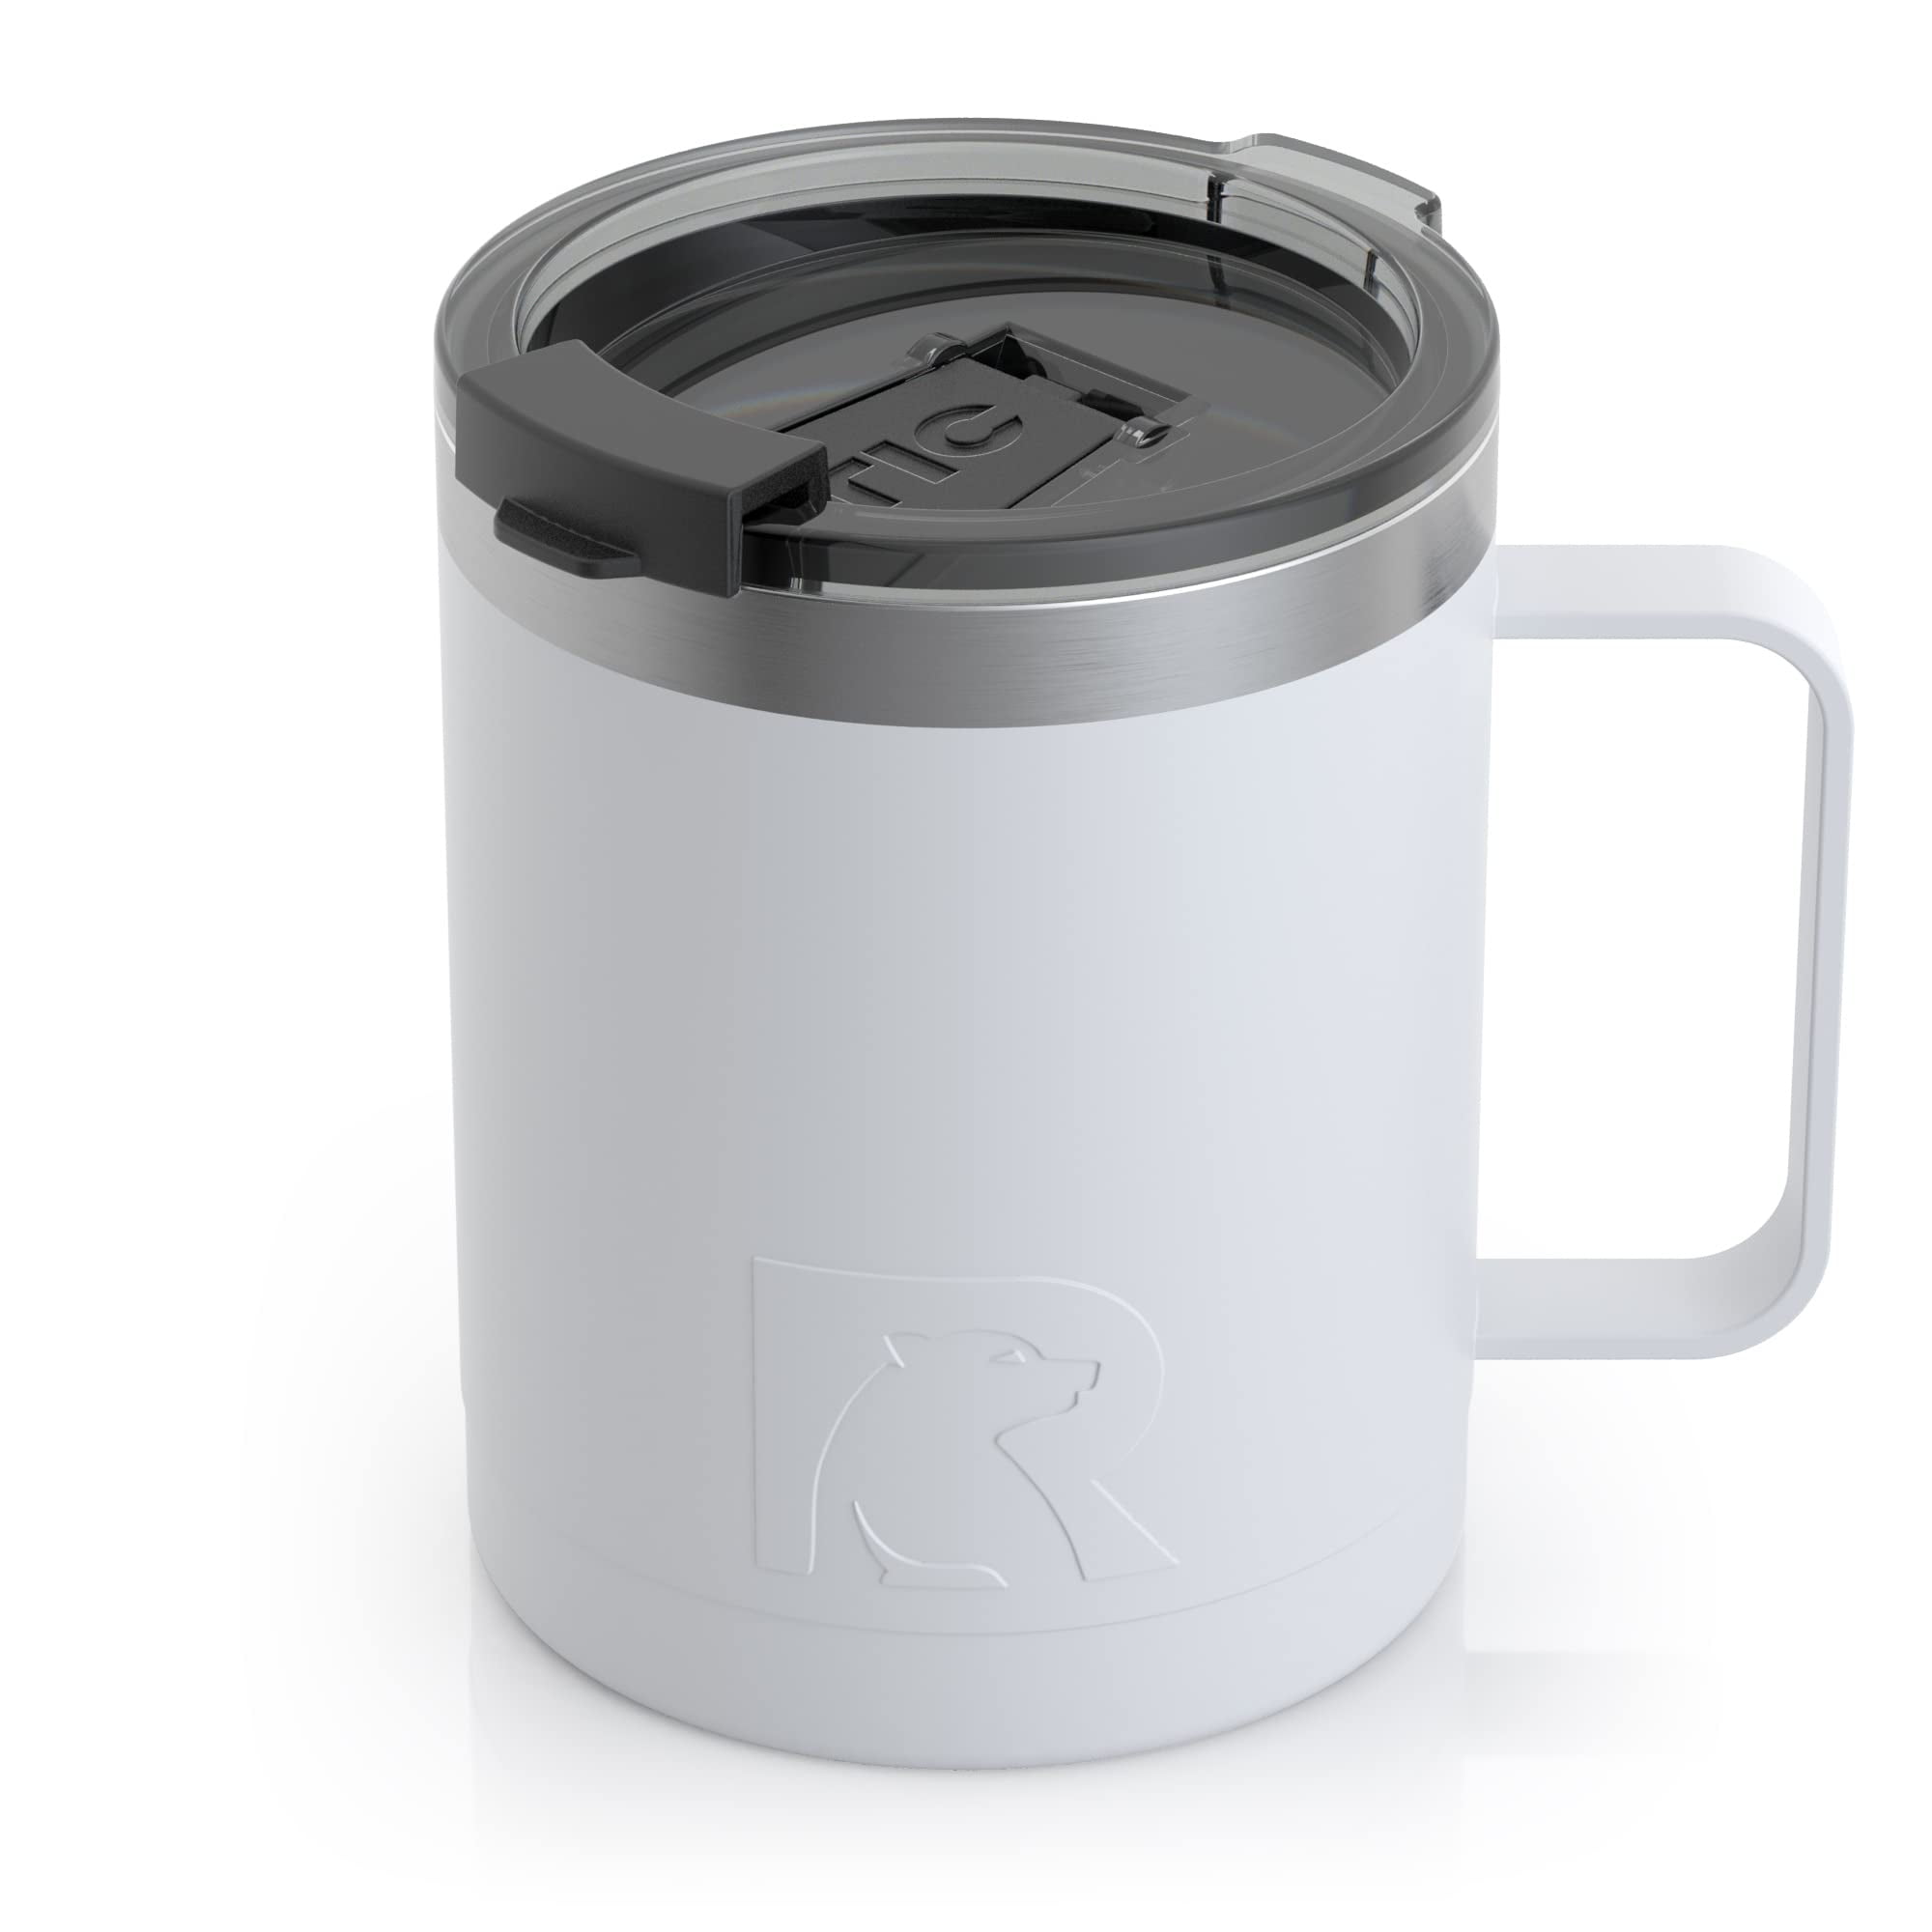 rtic 04143 RTIC Coffee Mug w/ Handle